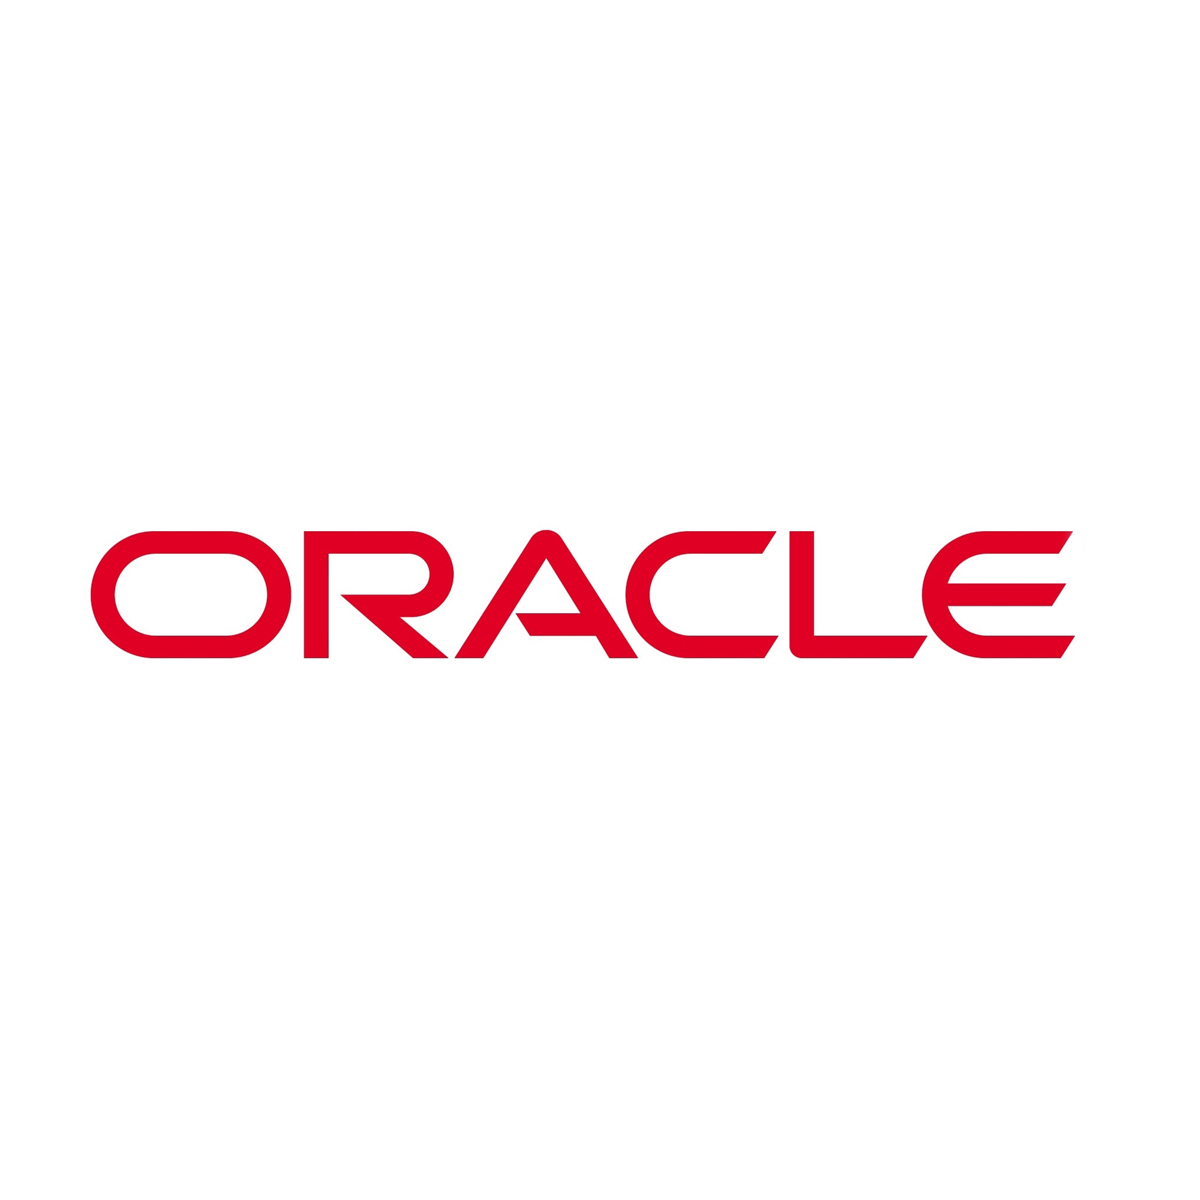  Best Cloud CRM Solution Logo: Oracle